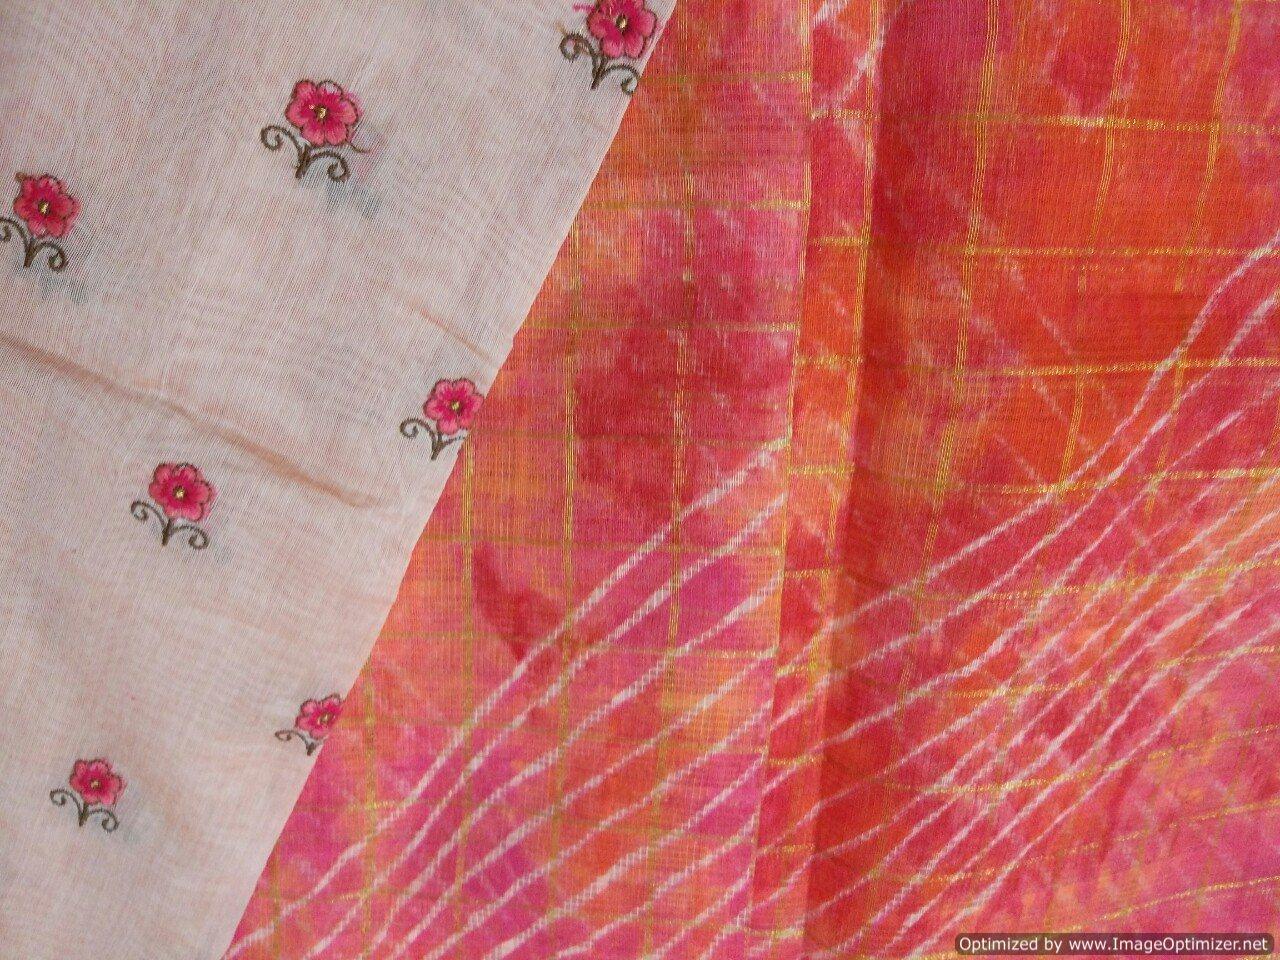 Designer Pink Zari Weaven Kota Shibori Saree KCS120-Ethnic's By Anvi Creations-Handloom Saree